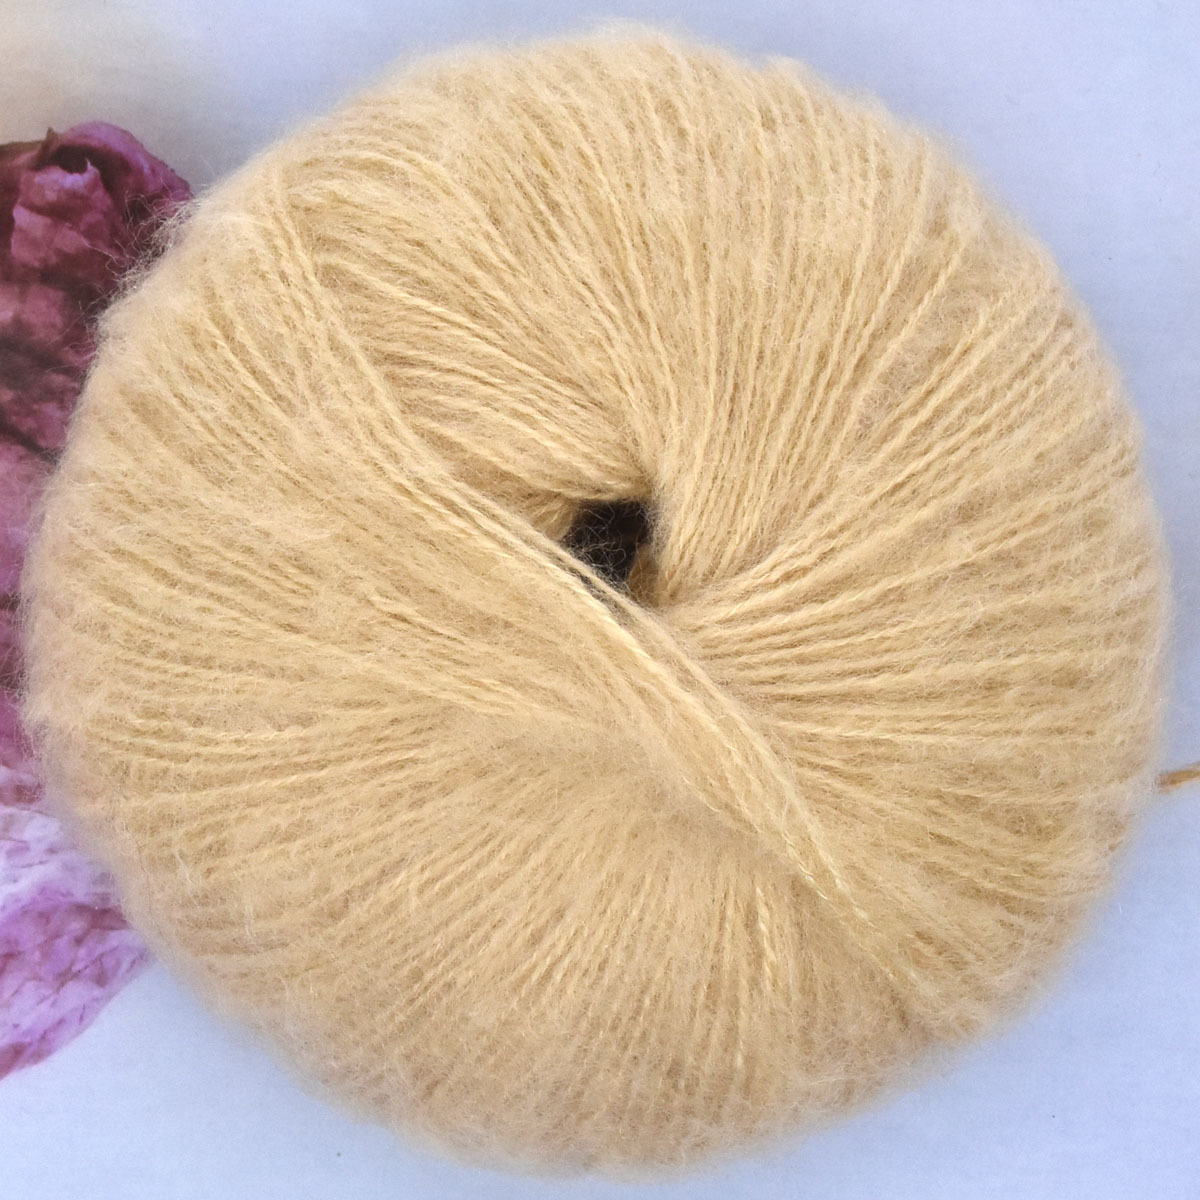 25g/Ball Mohair Cashmere Yarn Long Plush Knitting Thread Wool for Knitting  Sweater Shawl Soft Warm Fancy Yarn Christmas Gifts